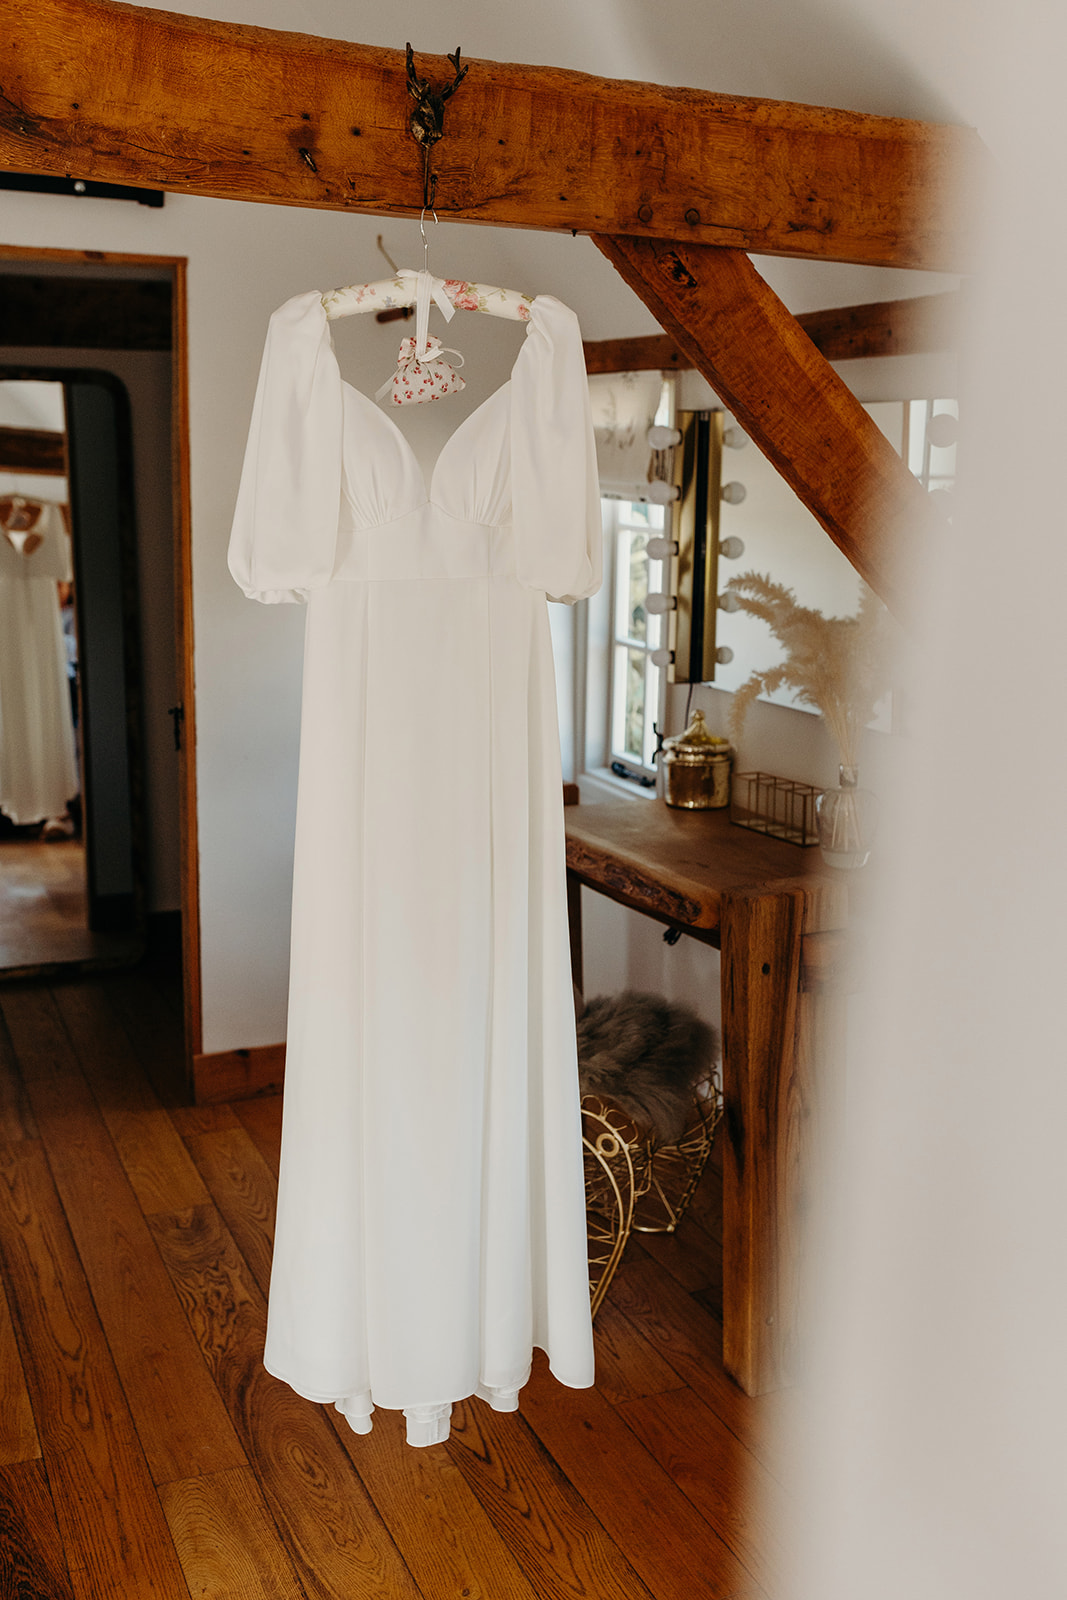 Bride's elegant wedding dress hanging in the bridal suite at Silchester Farm.
